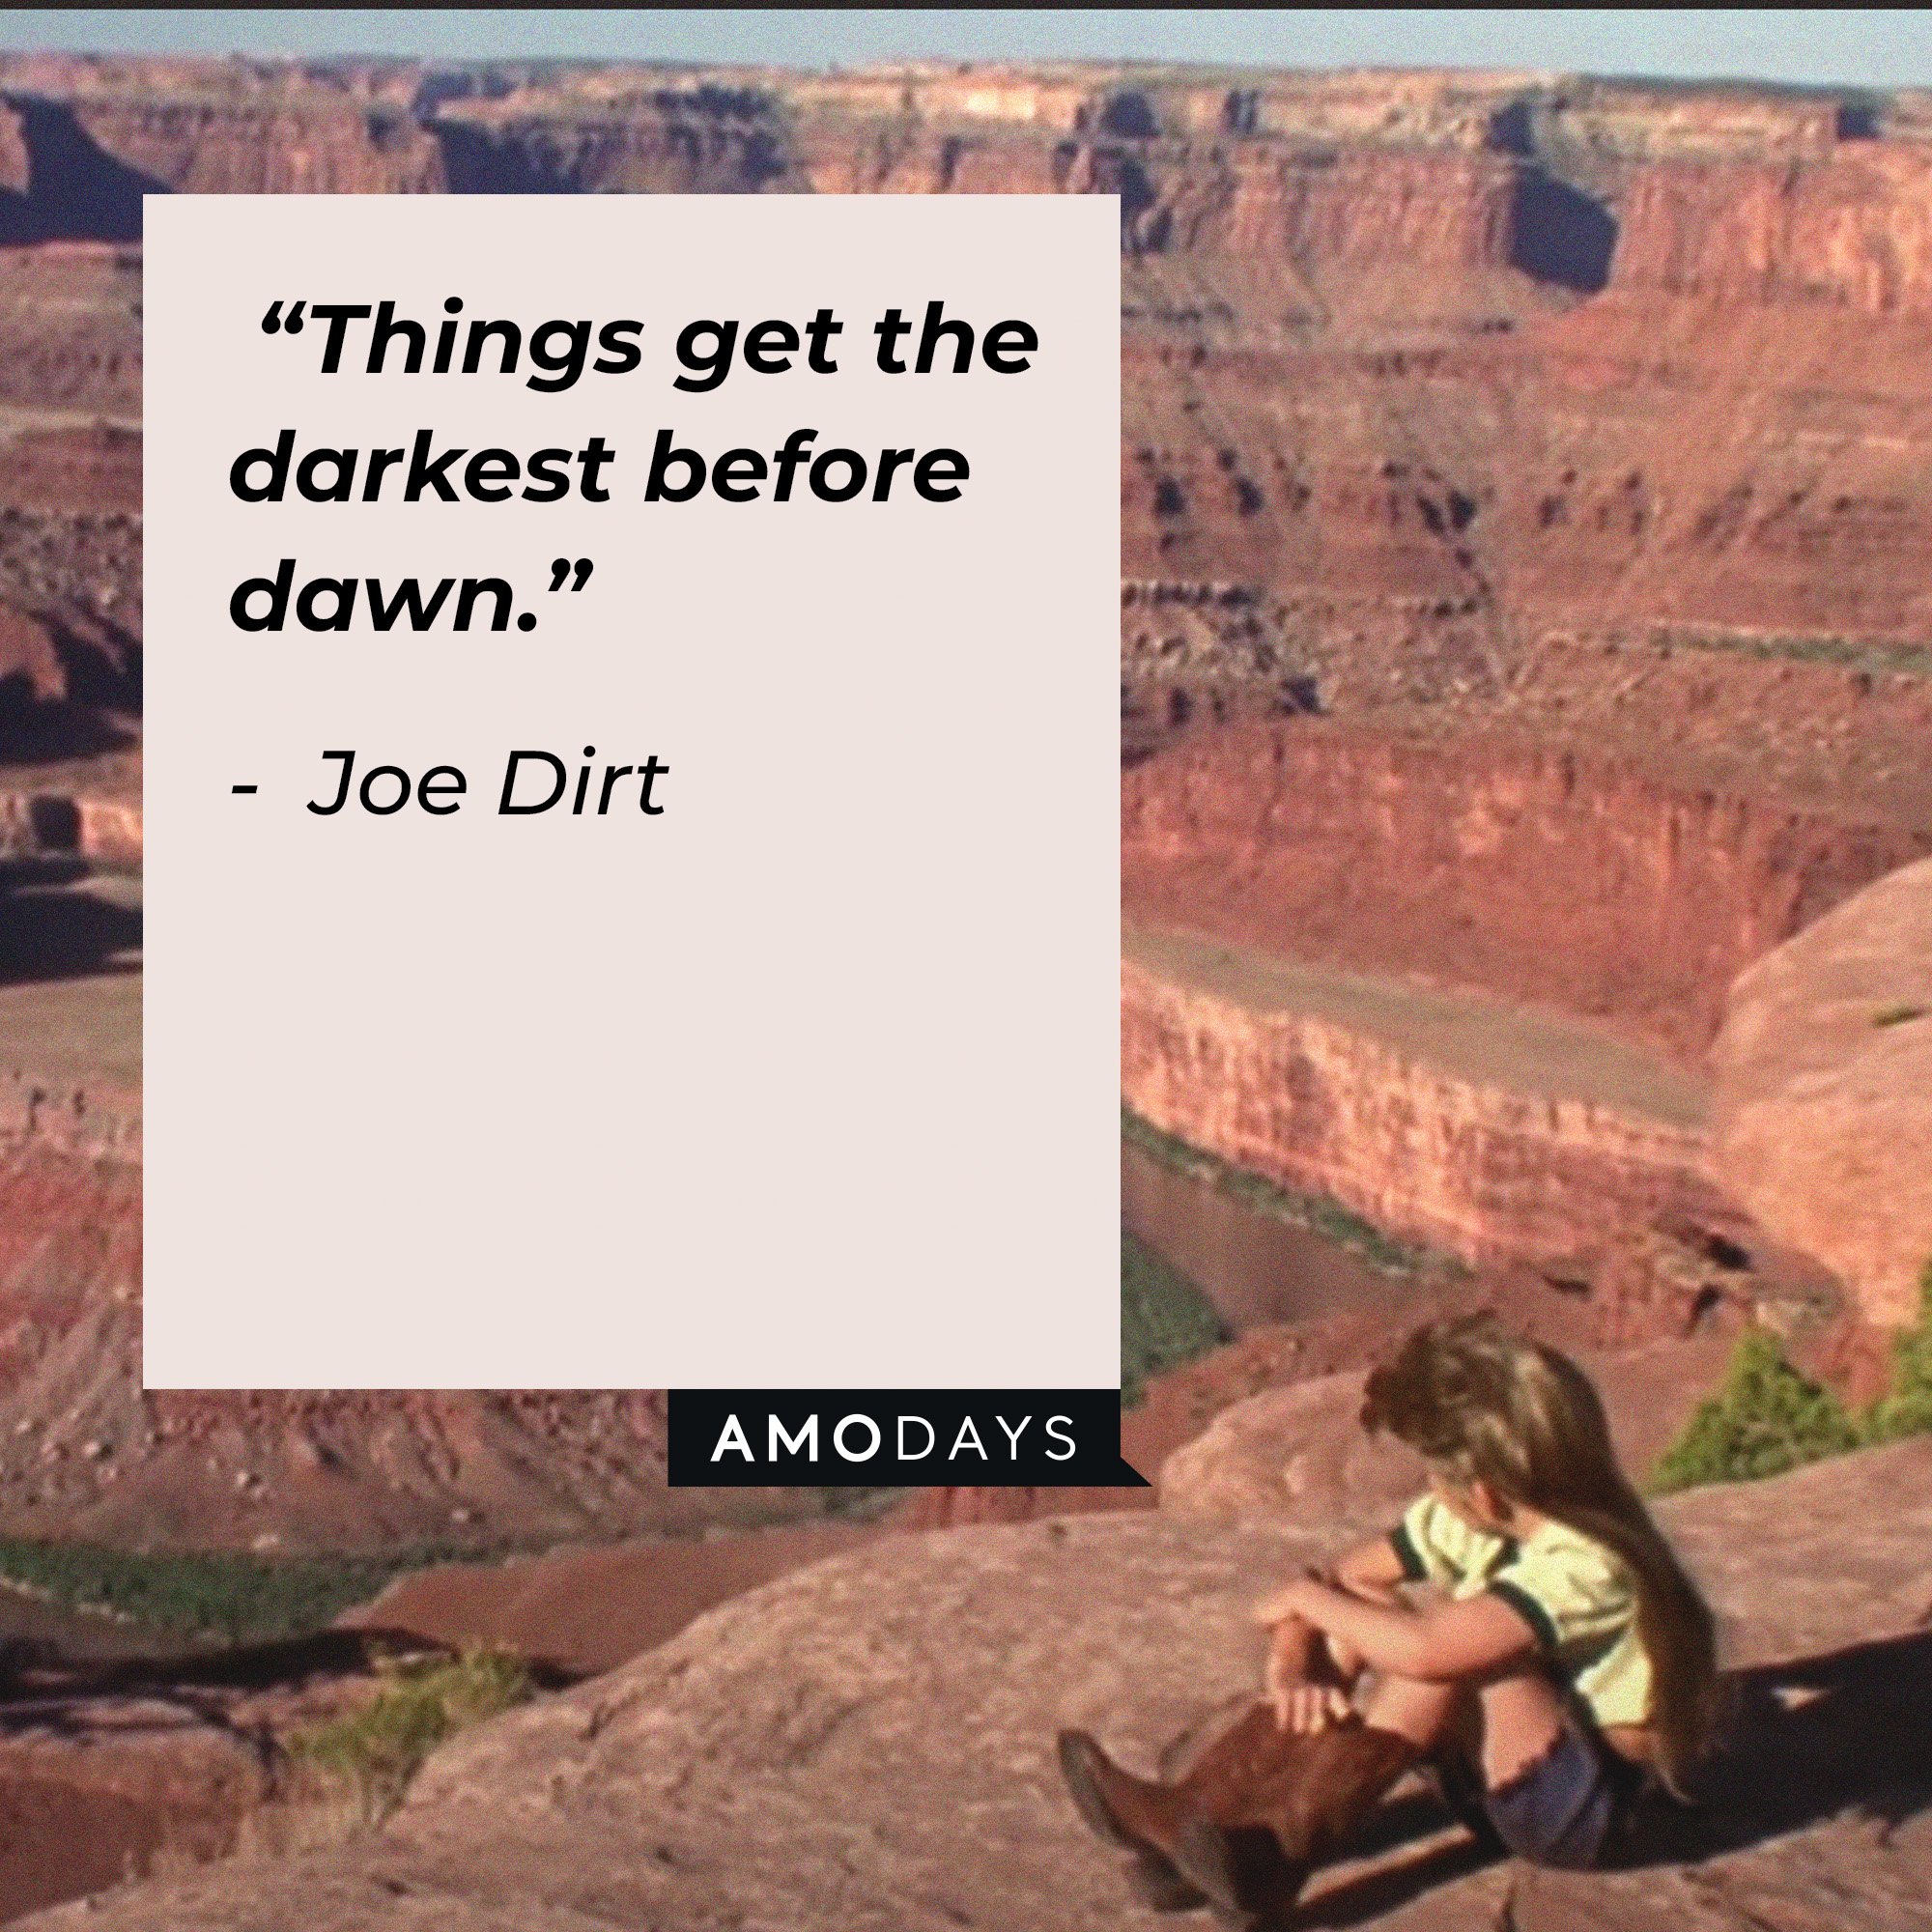 Joe Dirt's quote: “Things get the darkest before dawn.” | Image: AmoDays